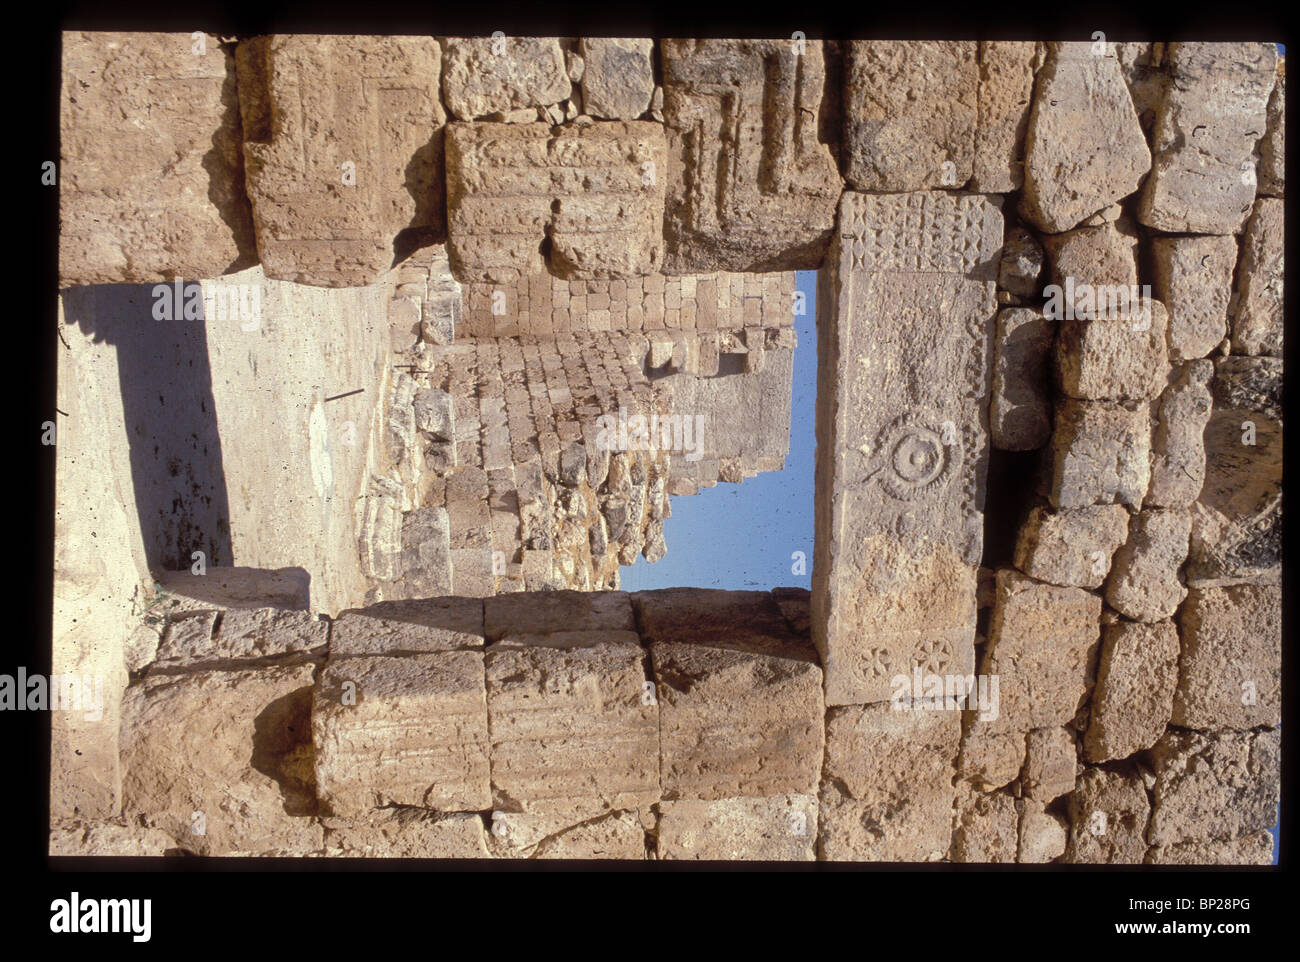 2267. ESHTAMOA SYNAGOGUE DATING FROM THE 5 - 6TH. C. A.D. LOCATED IN THE VILLAGE OF ESHTAMOA NEAR HEBRON. THE MAIN GATE Stock Photo